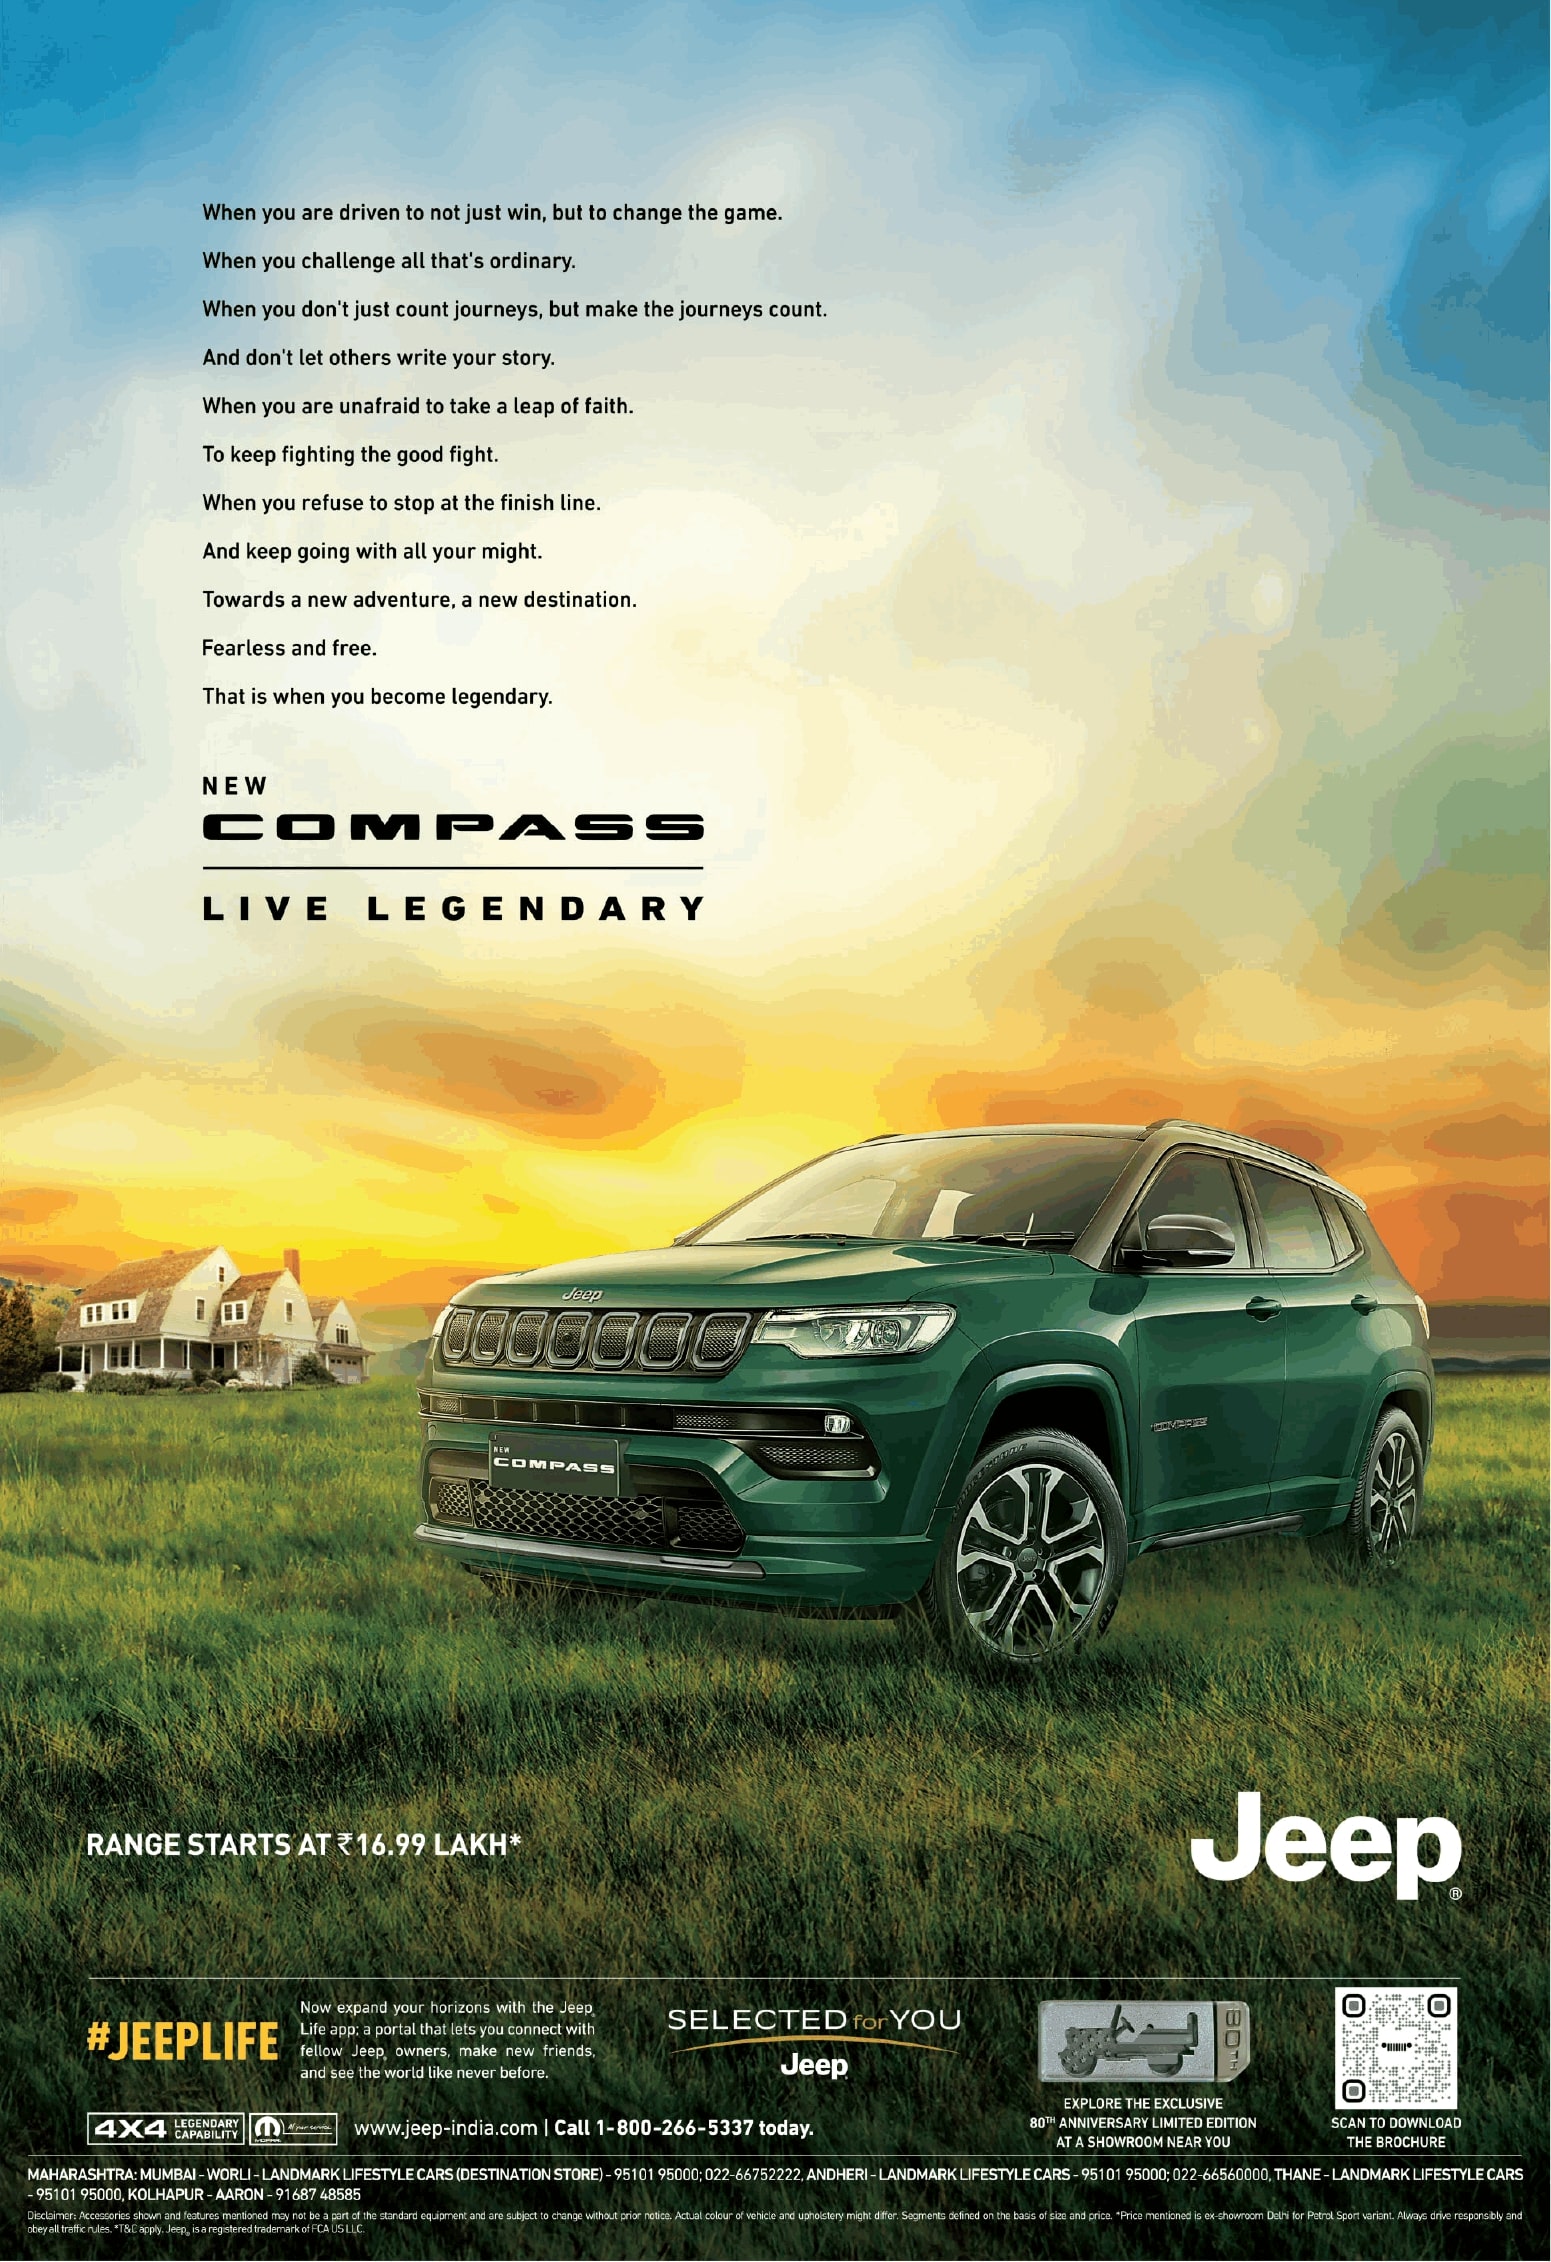 jeep-compass-live-legendary-ad-times-of-india-mumbai-16-02-2021